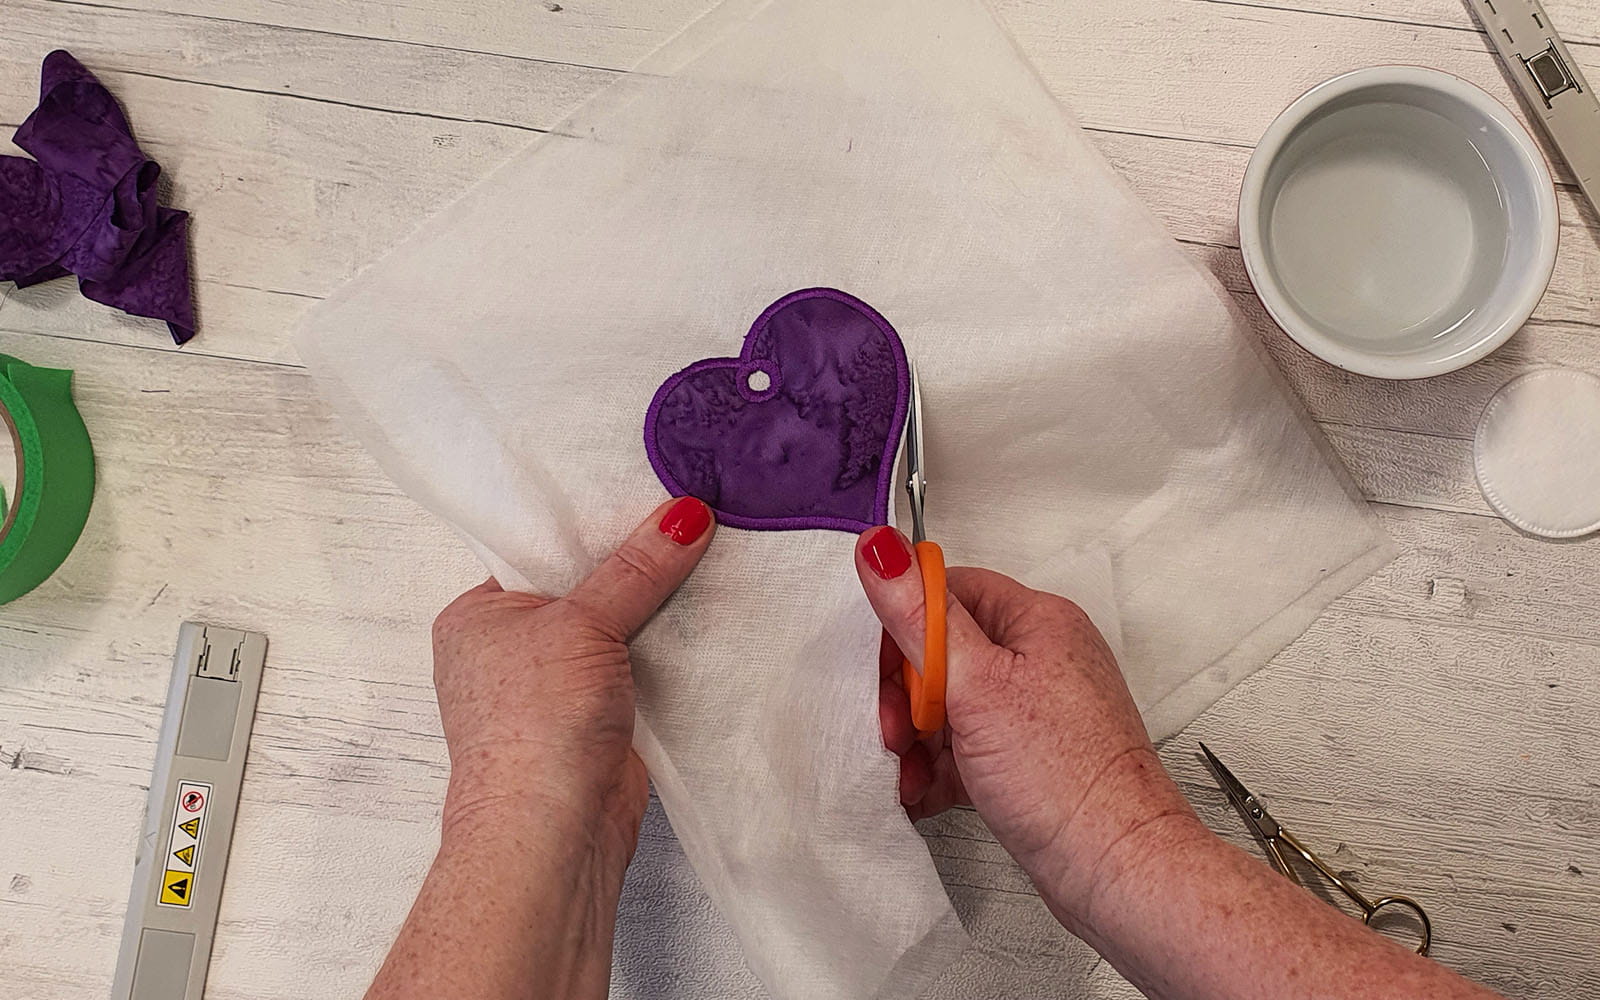 Scissors cutting purple heart from white fabric